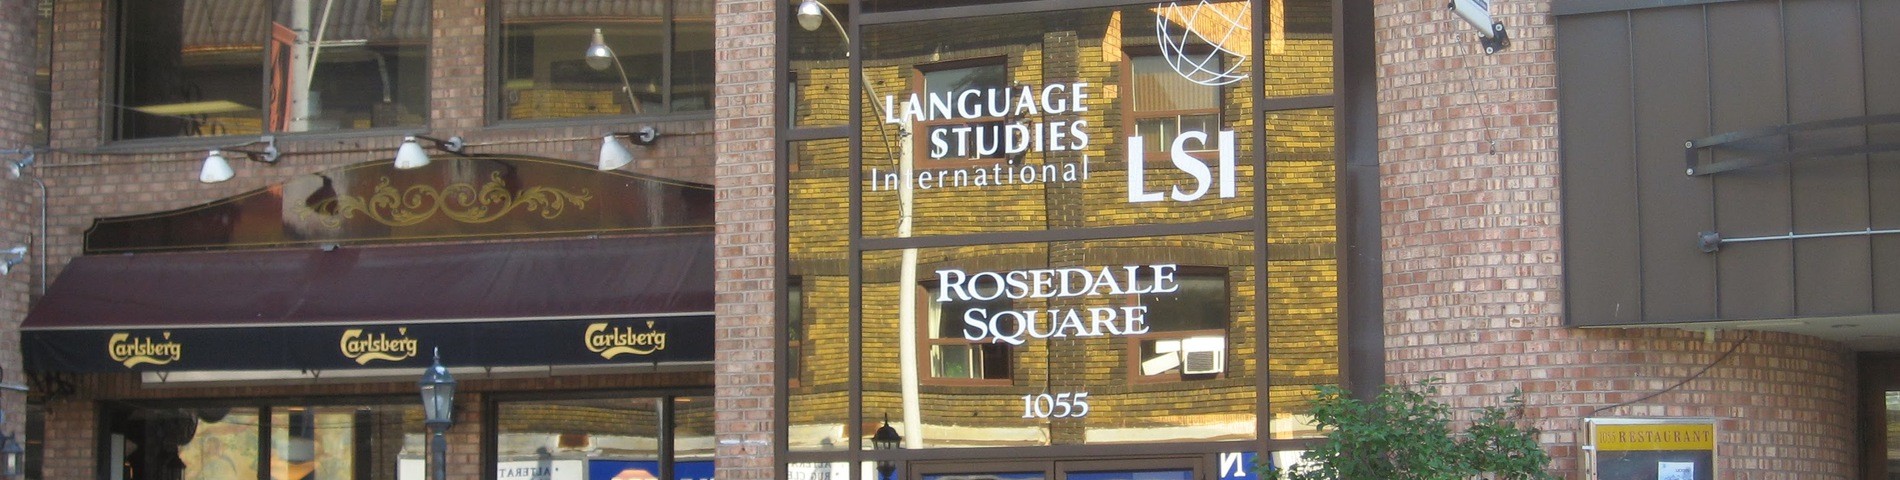 LSI - Language Studies International billede 1